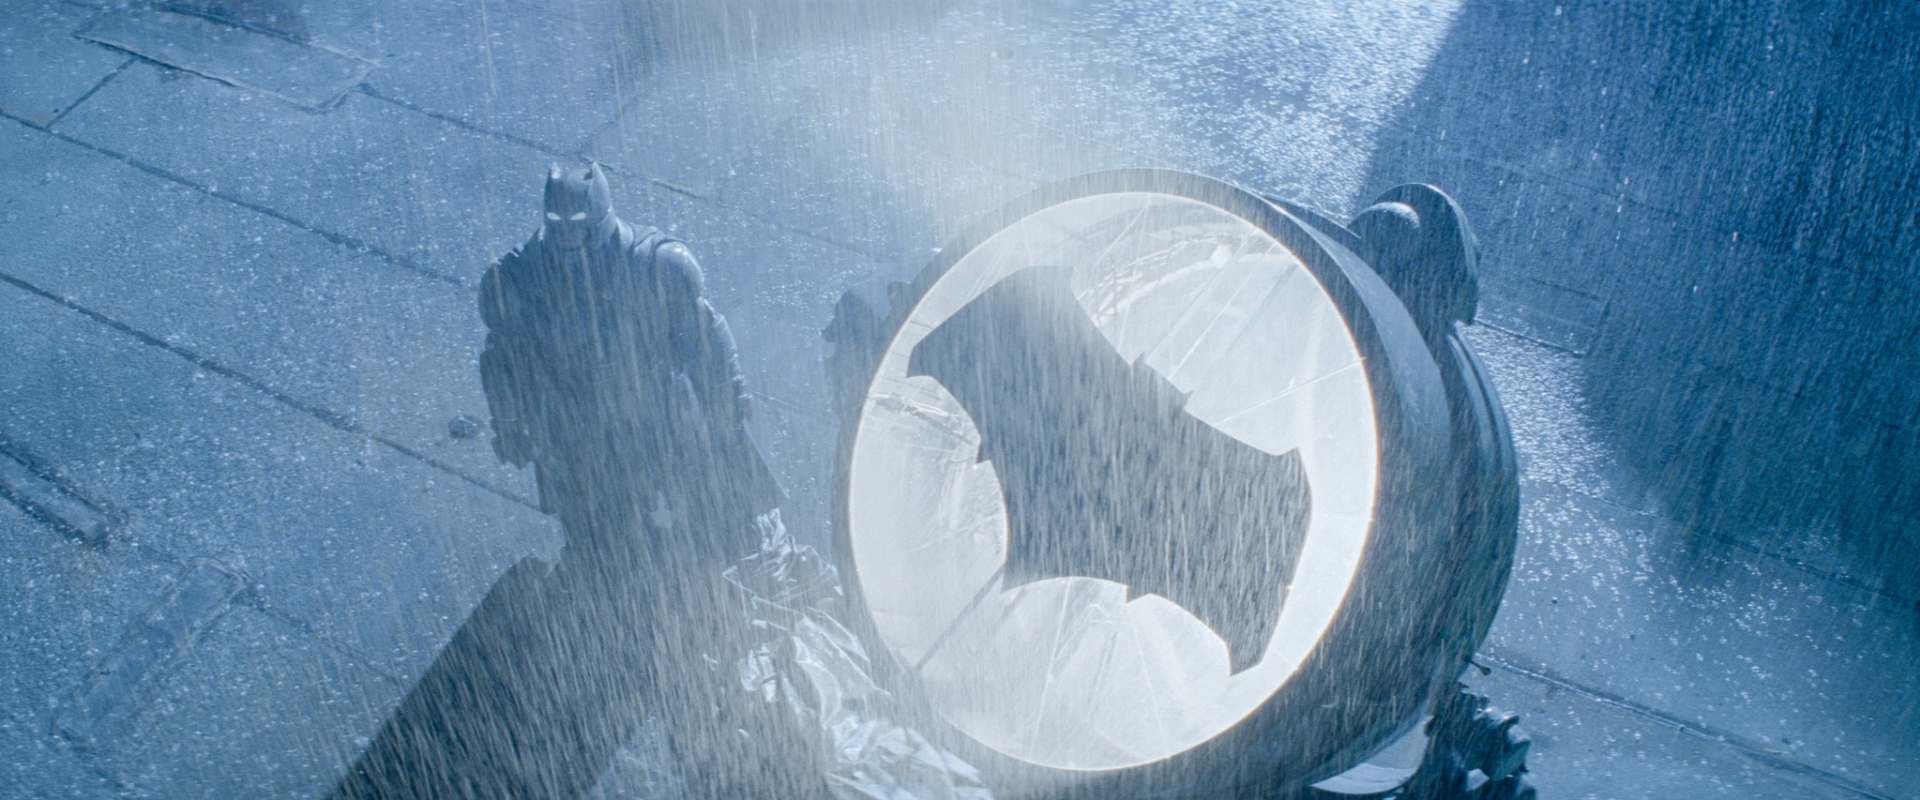 Batman v Superman: Dawn of Justice background 2